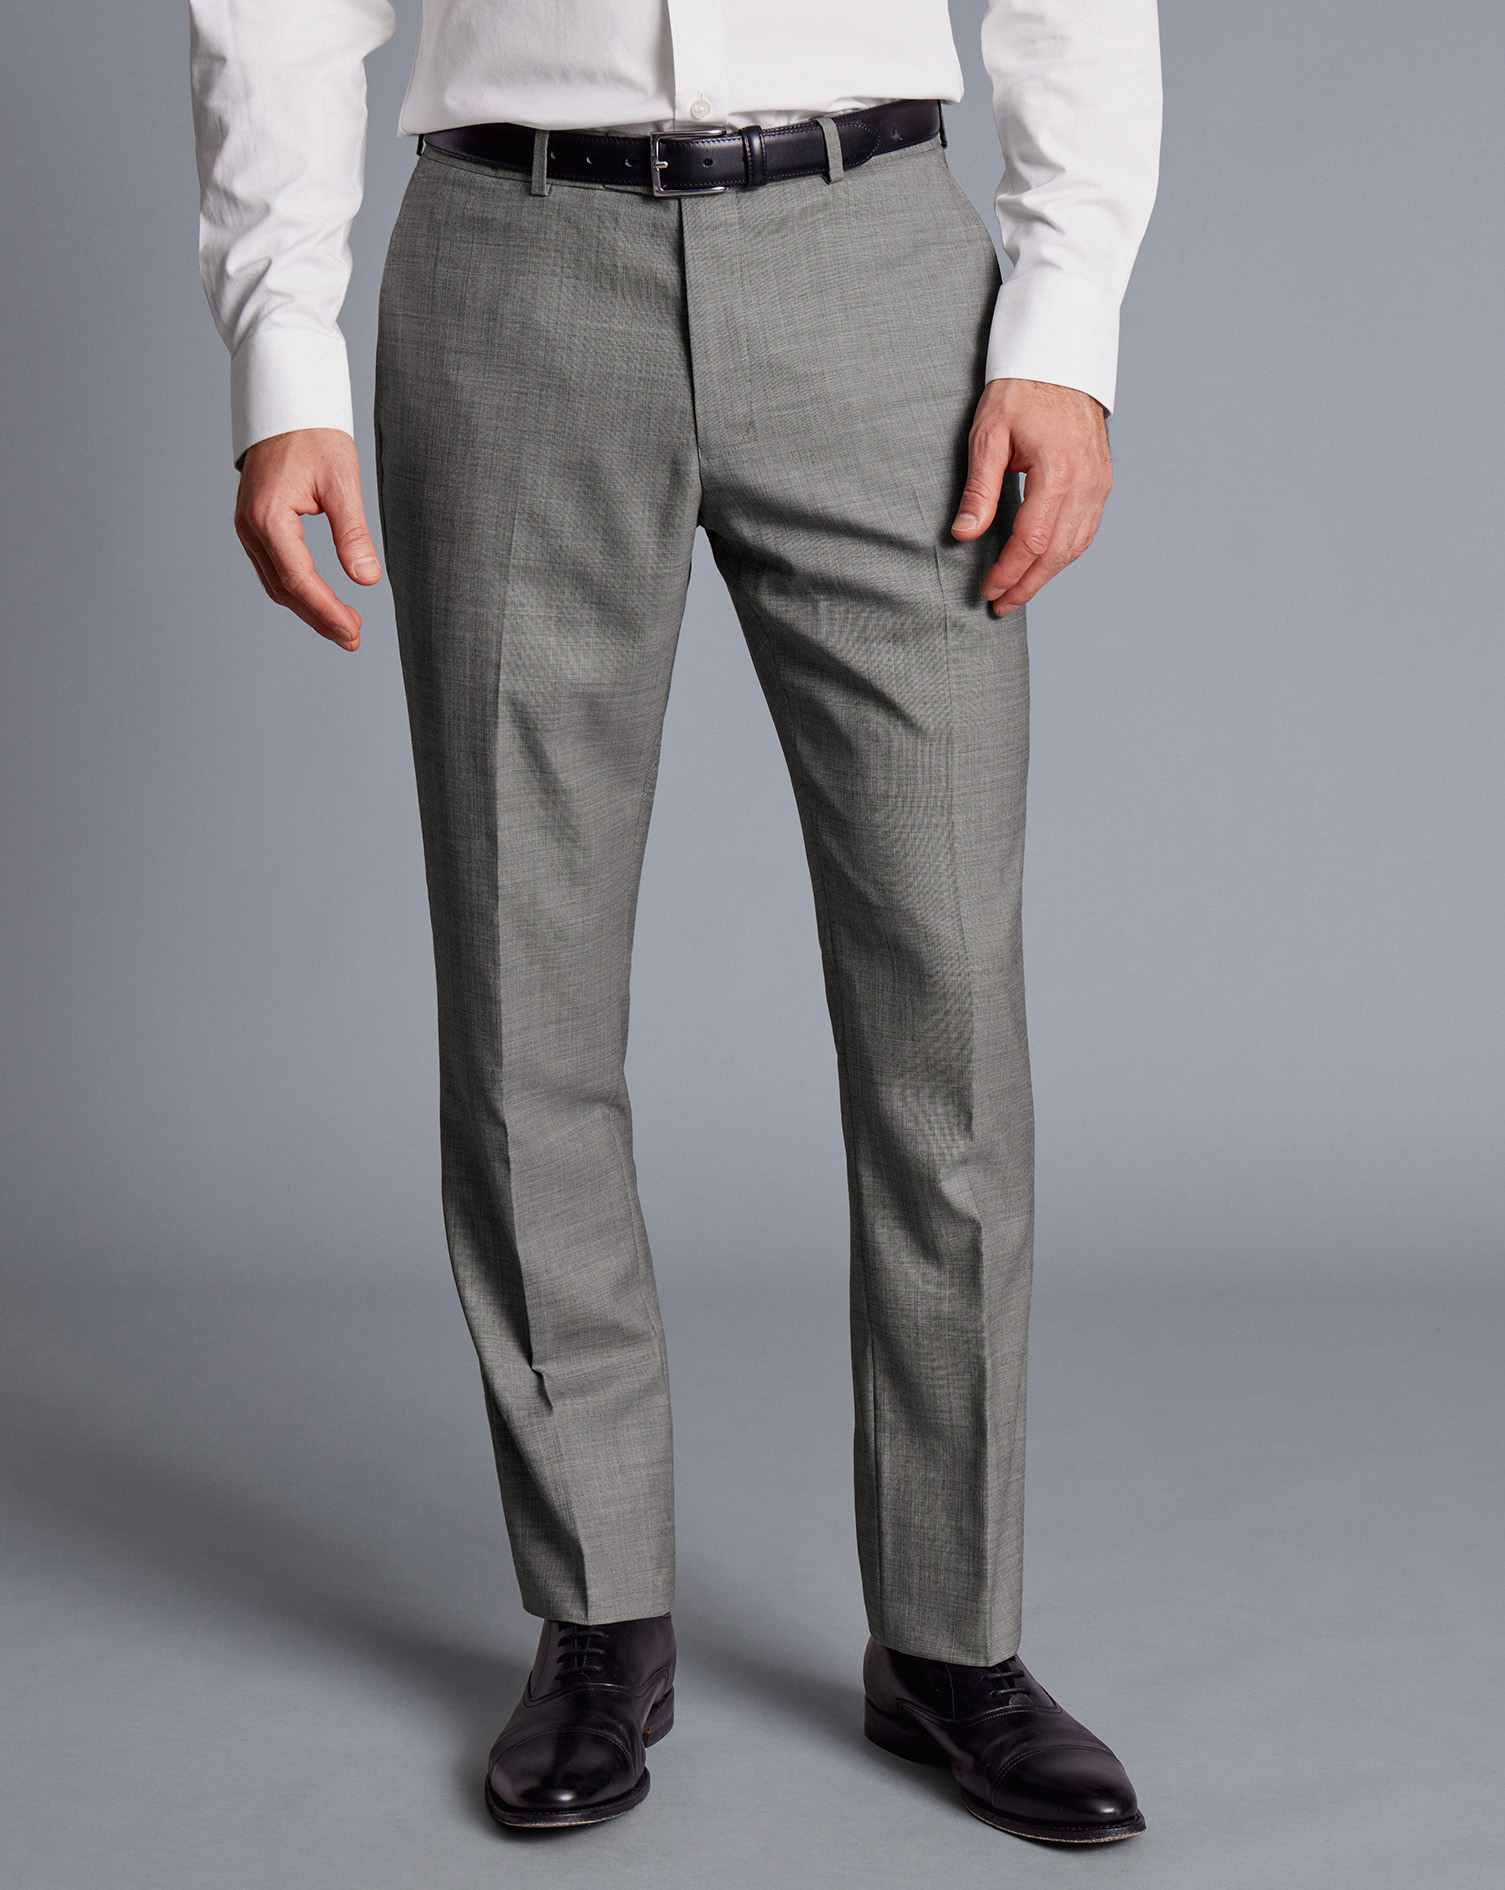 Men's Charles Tyrwhitt Sharkskin Suit Trousers - Light Grey Size 32/34 Wool
